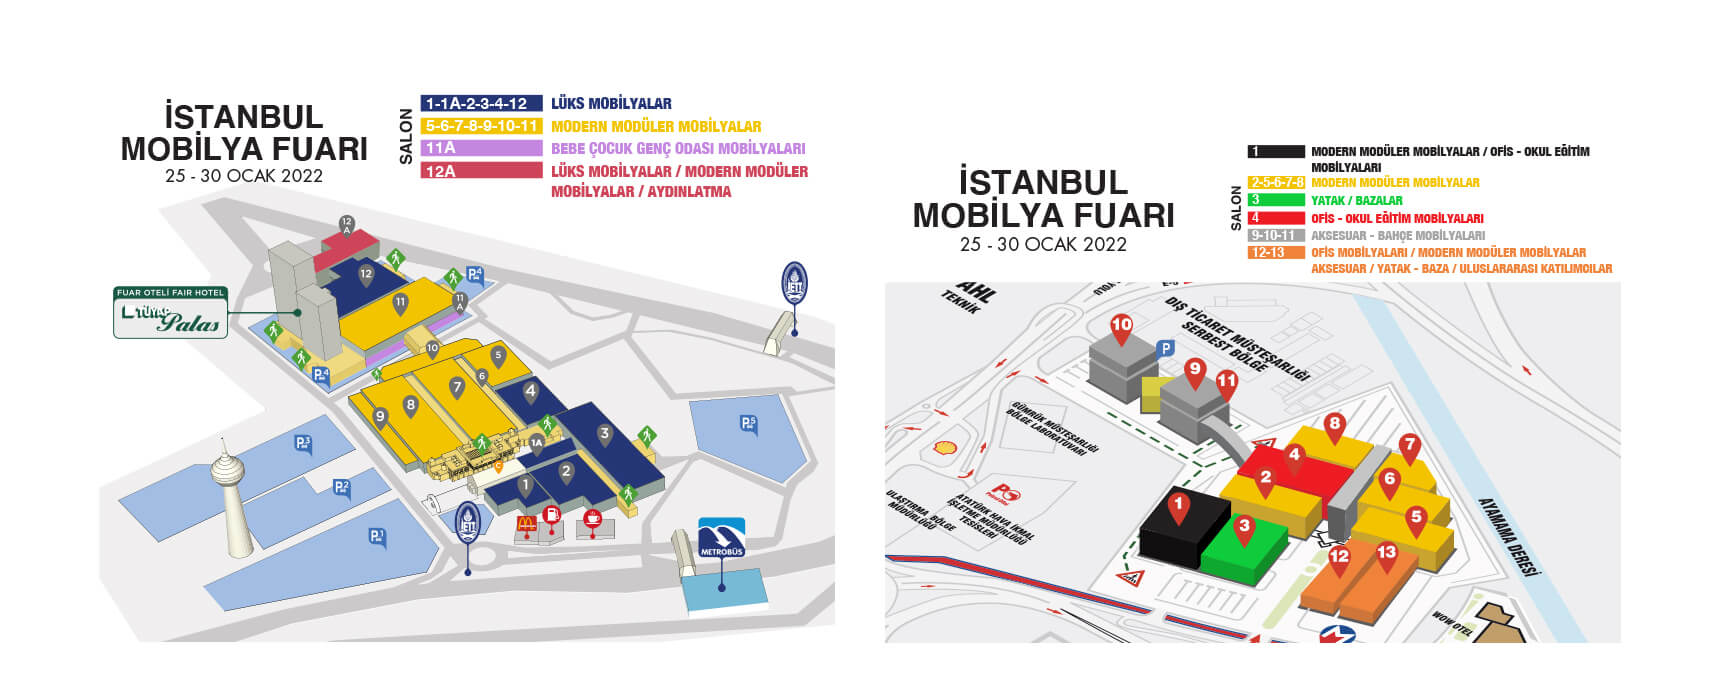 İstanbul Mobilya Fuarı-metin 1-5- logo-mockup-metin 2-6- size-security-7- logo-mockup-8- color-logo-9- key-visual-10- brochure-1-11- brochure-2-12- kroki